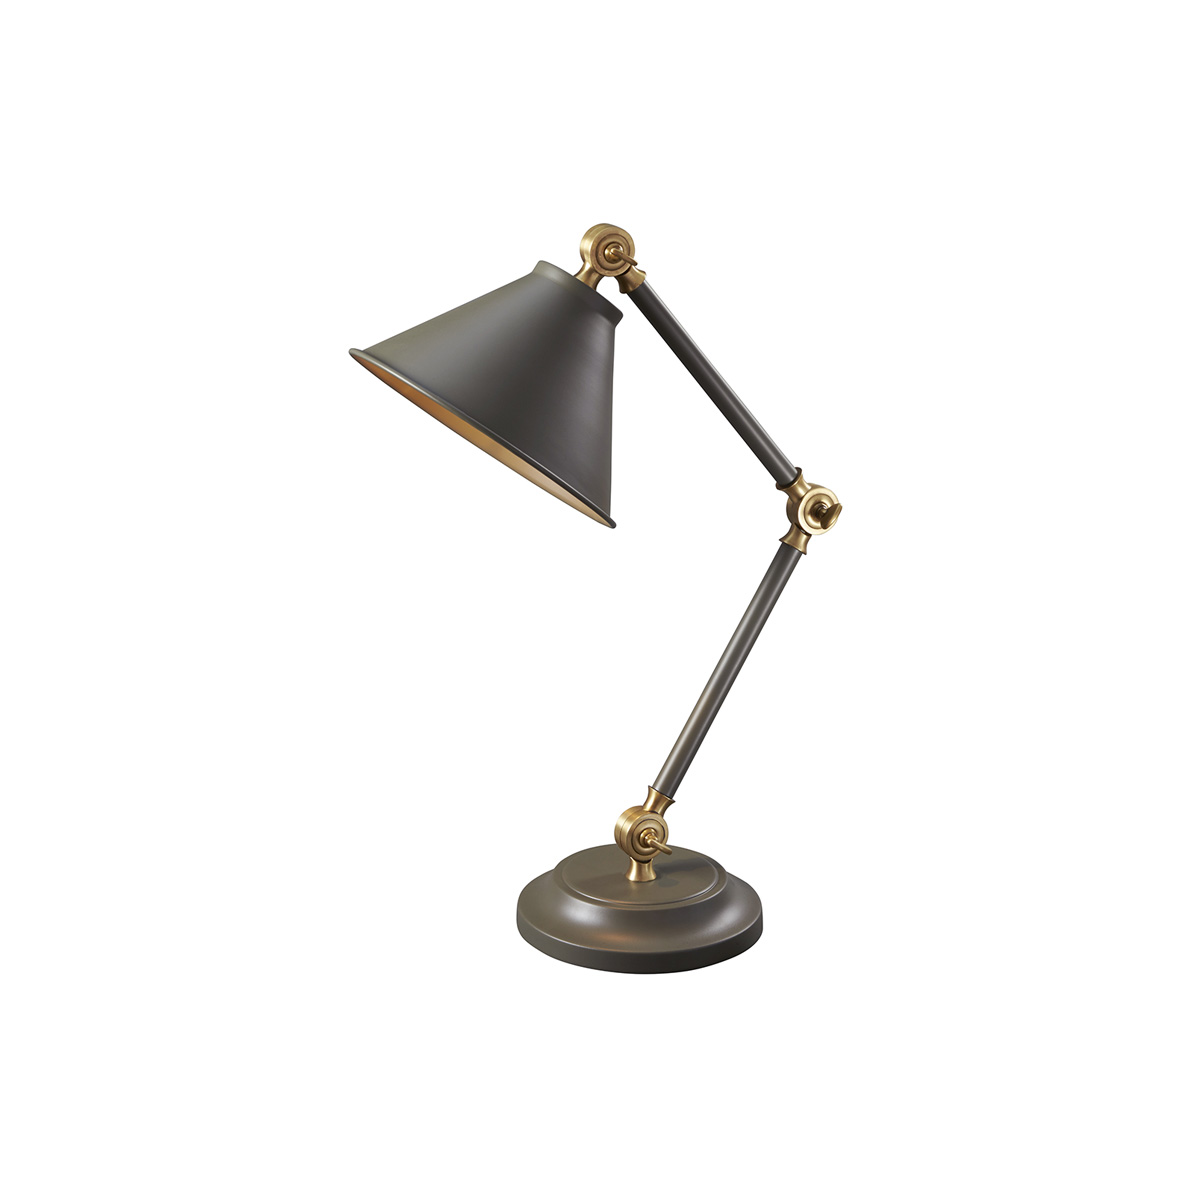 Настольная лампа PV-ELEMENT-GAB, Настольные лампы Лофт/Индустриальный | Металл | Зеленый | Прихожая, спальня, гостиная, столовая.